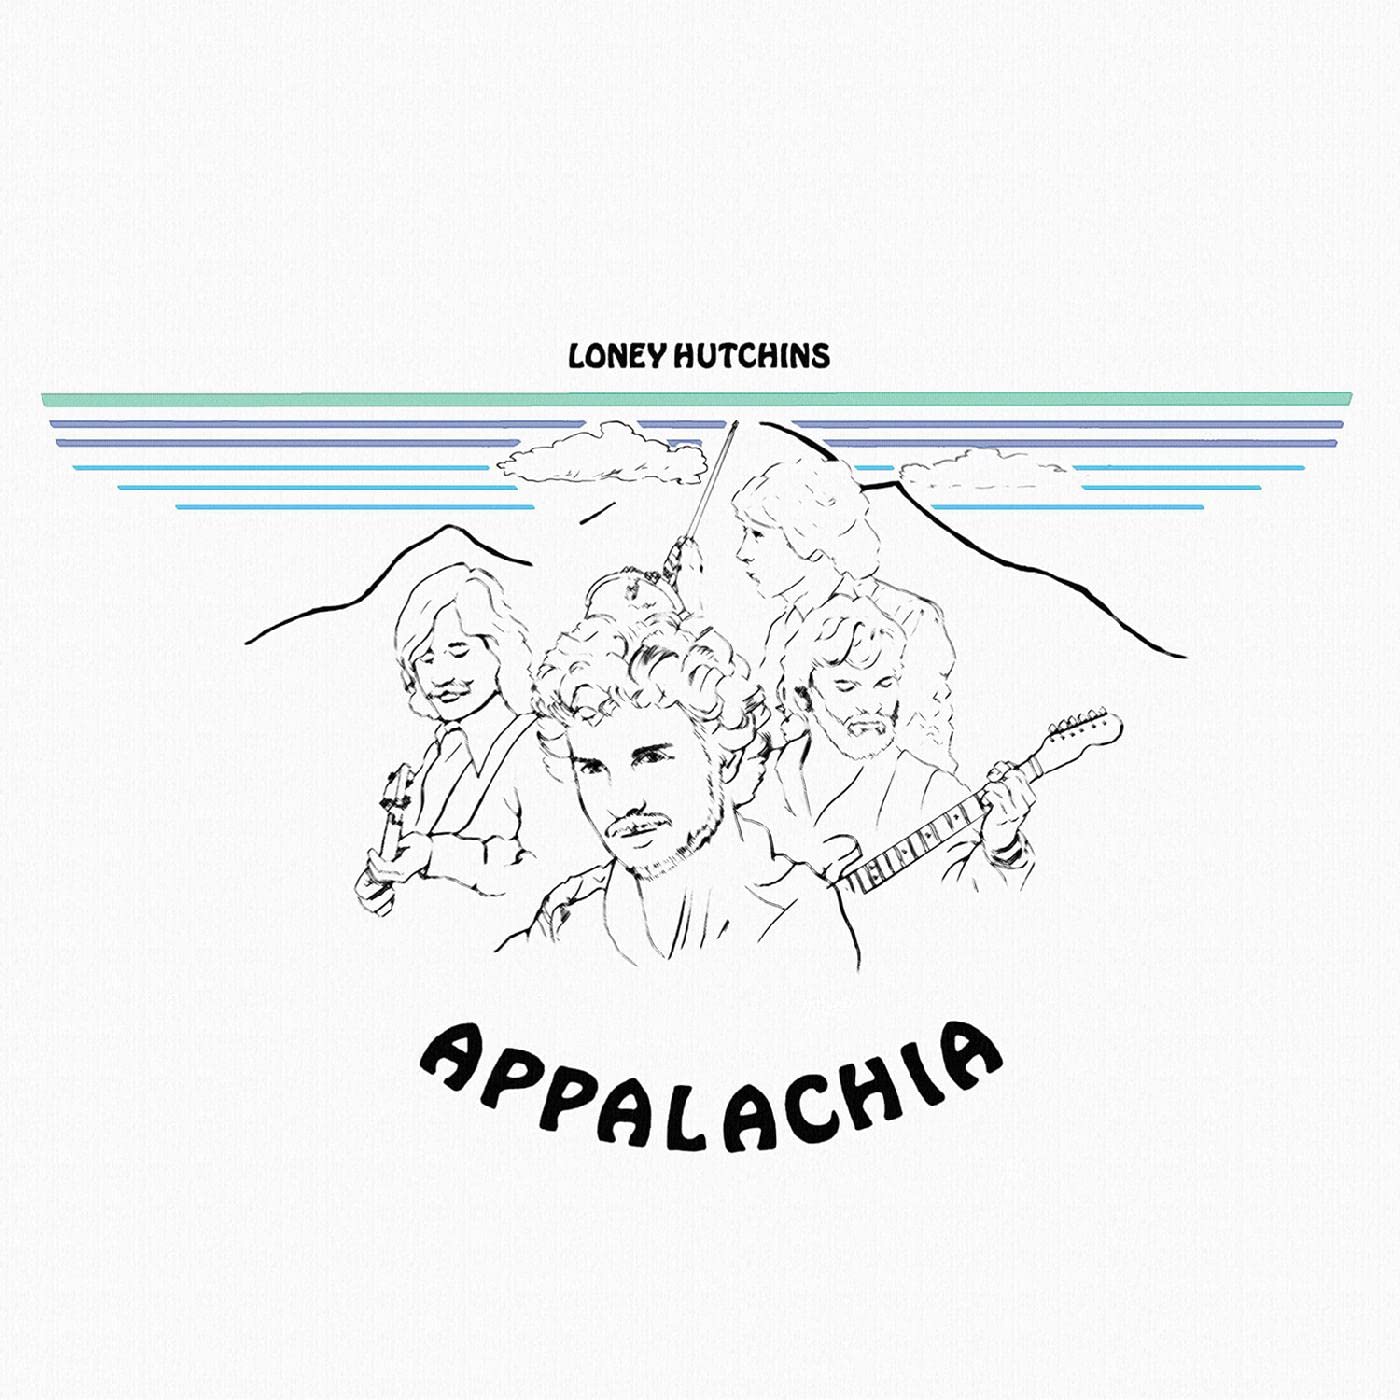 Loney Hutchins - Appalachia